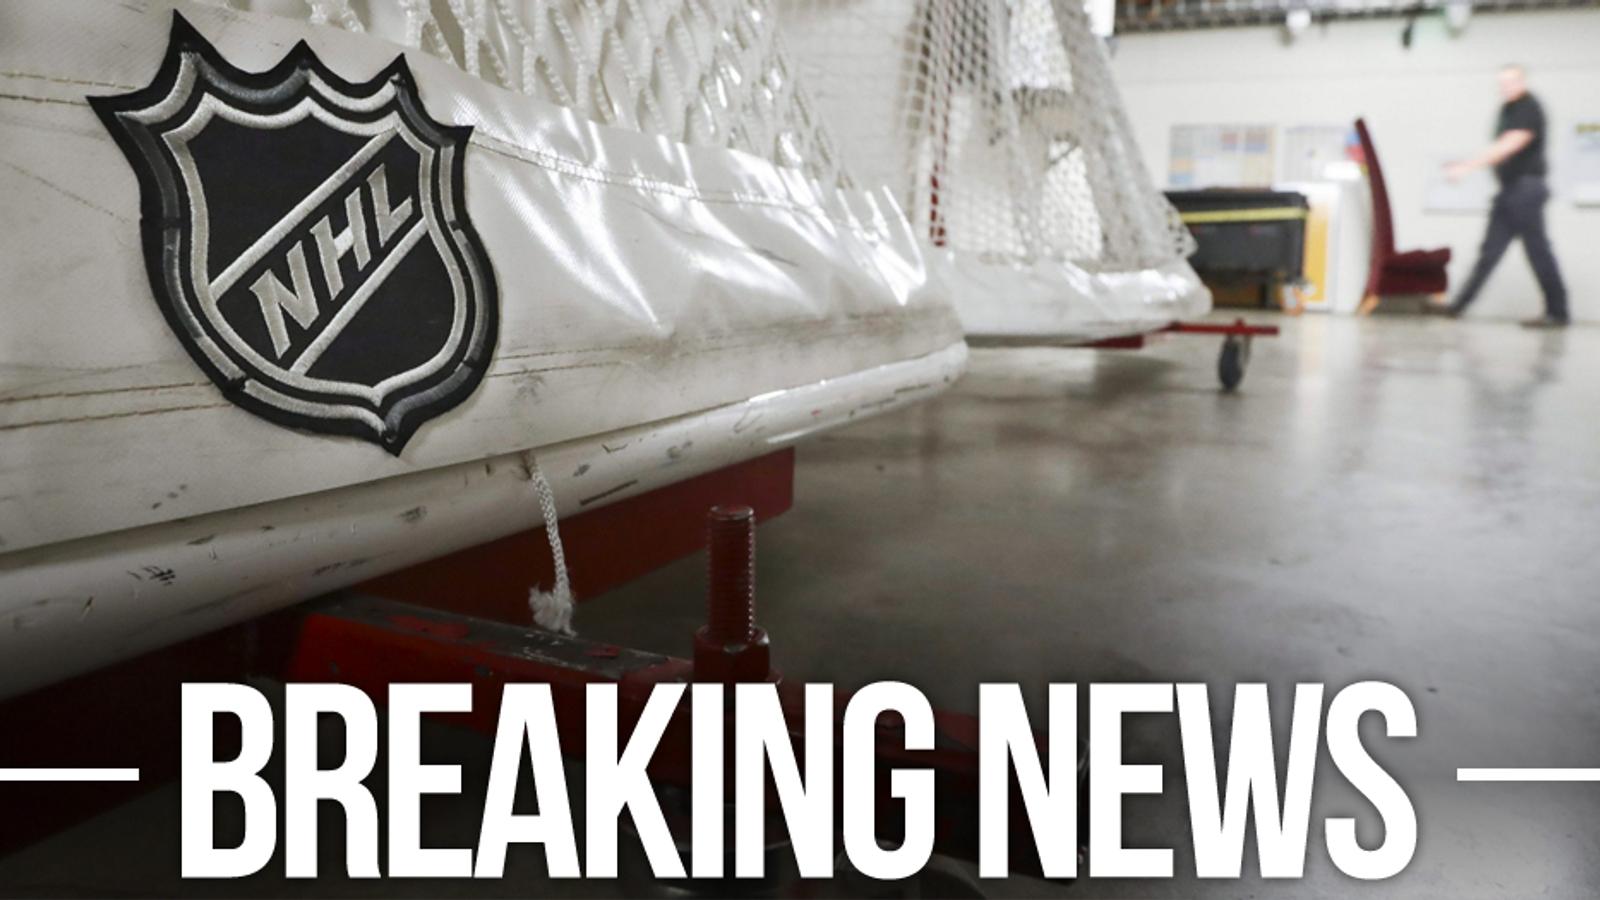 Wild, Sabres and Devils have their lockdown extended indefinitely, more games postponed